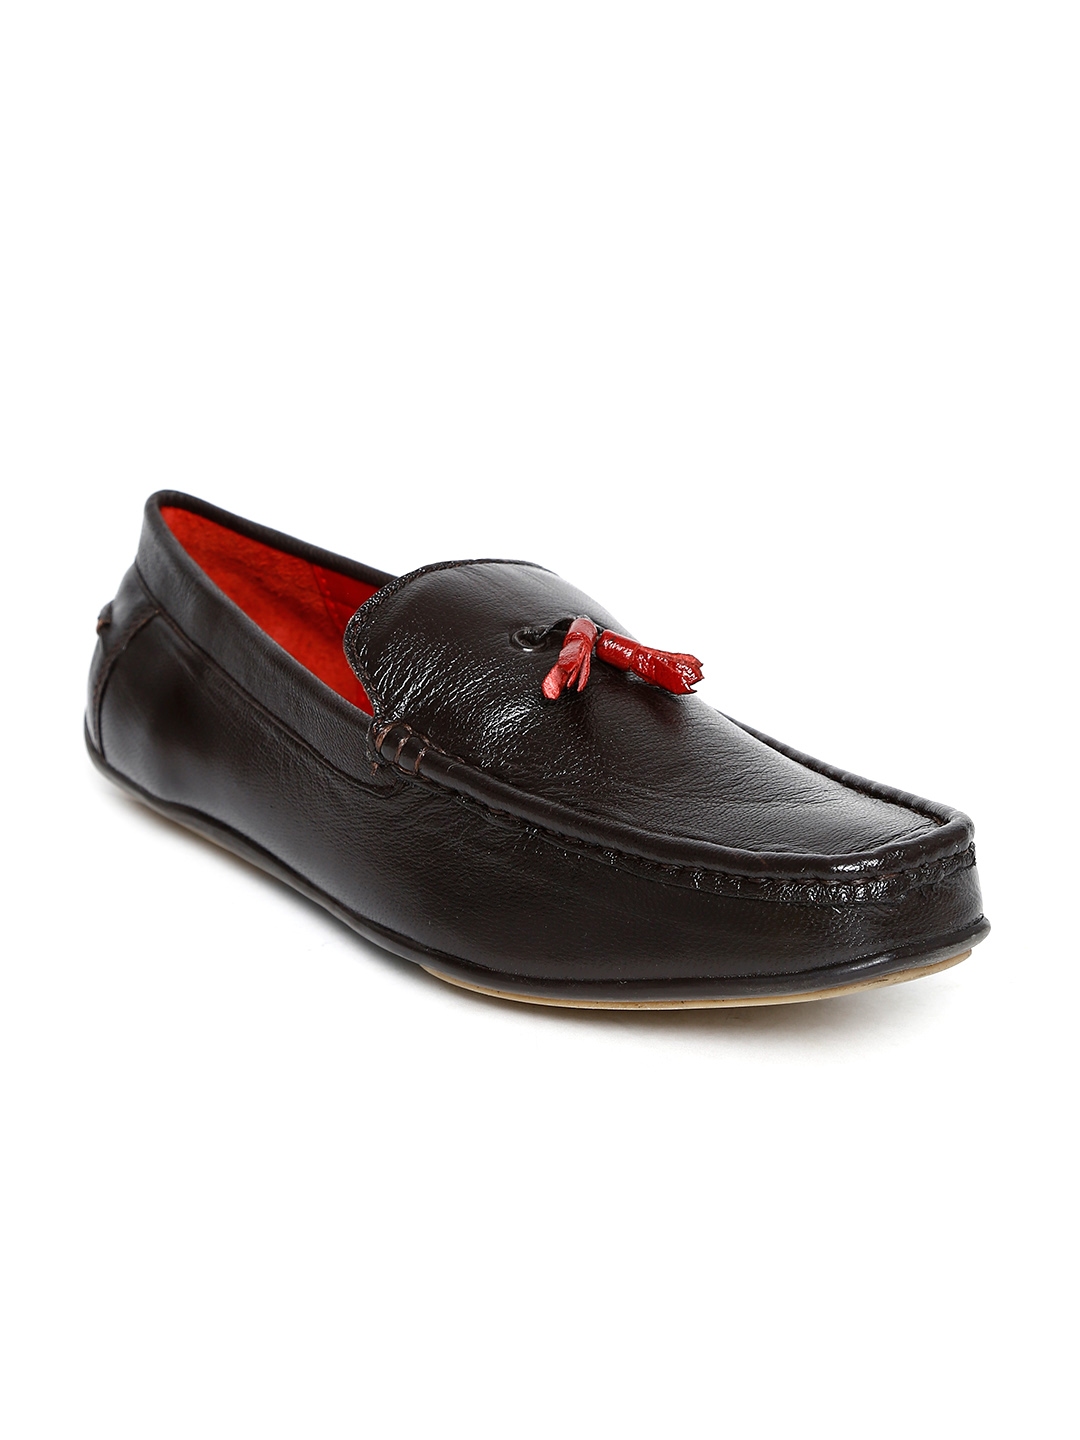 Buy Bata Men Dark Brown Leather Loafers 